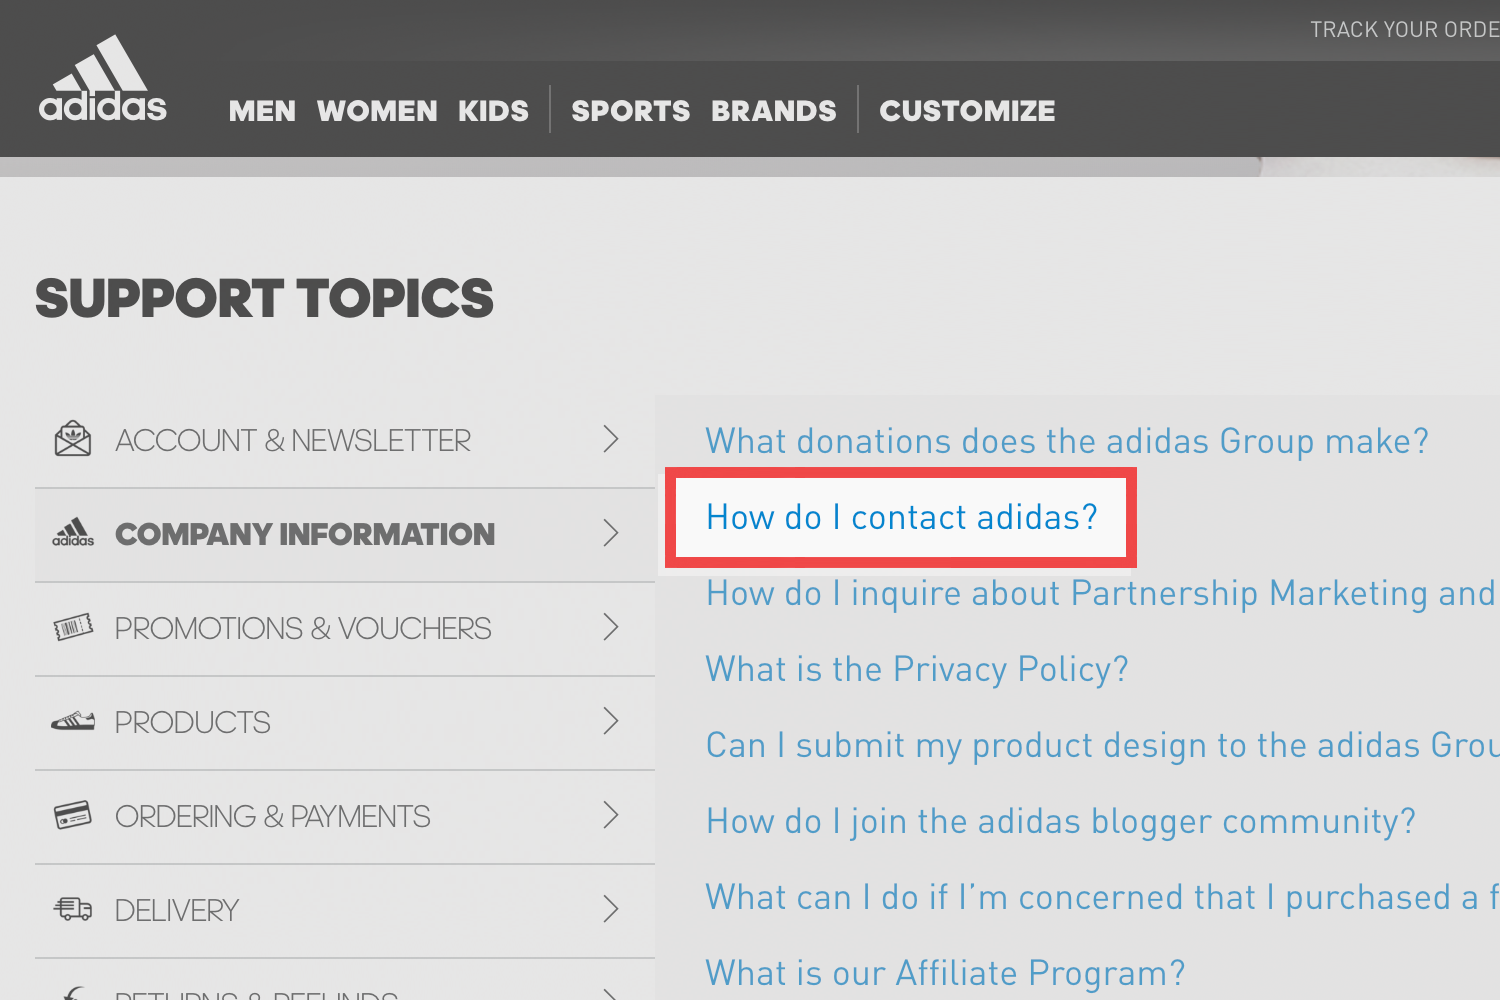 adidas contact information